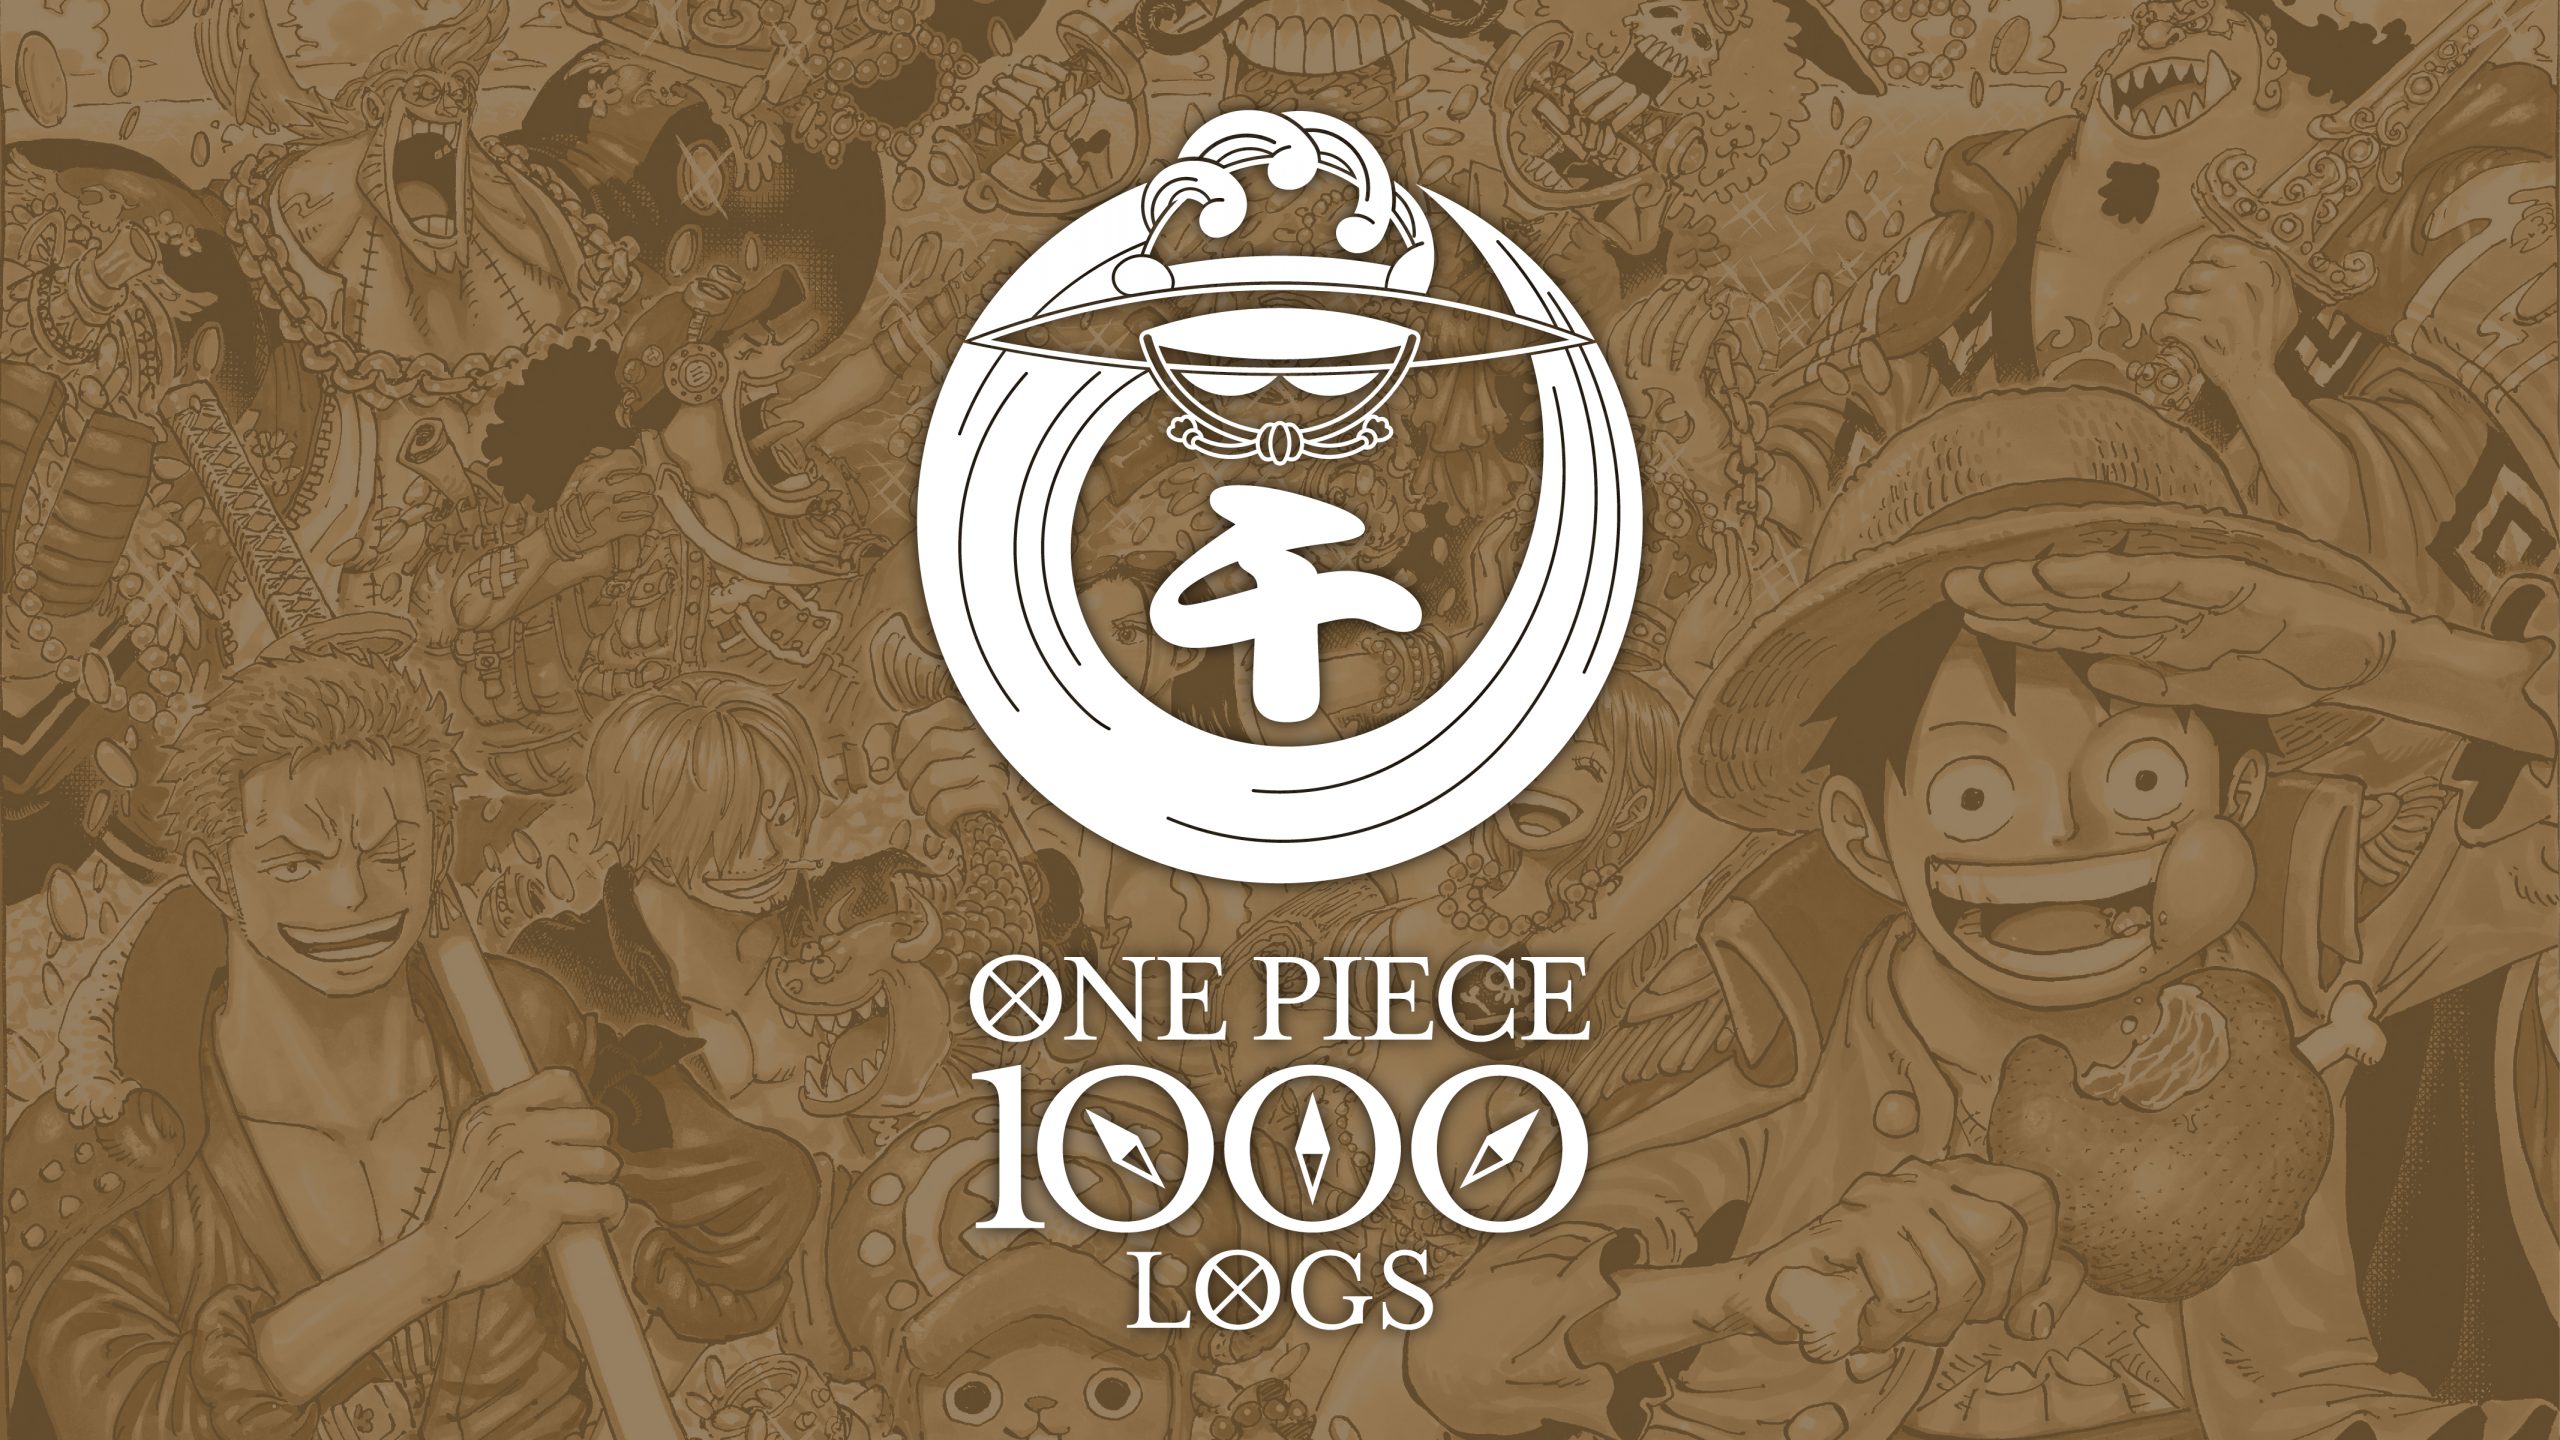 Helixes Log One Piece デザインワークスの裏側ーボックスデザインから千話記念ロゴに至る作品愛と解釈